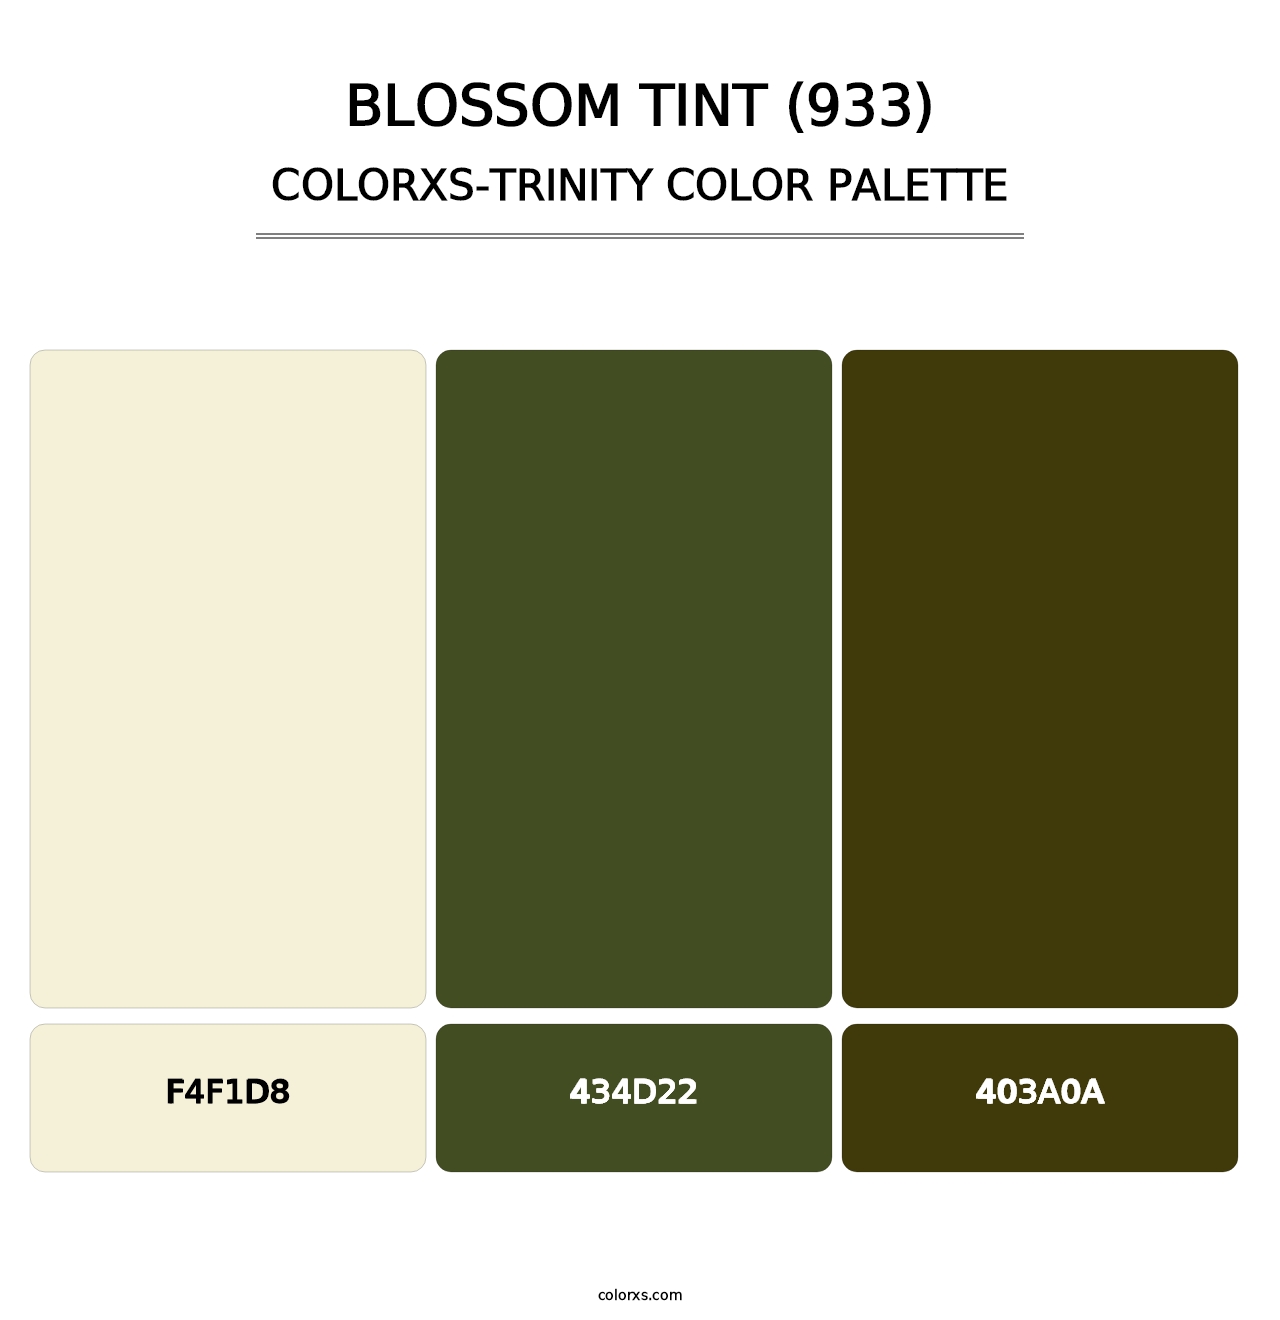 Blossom Tint (933) - Colorxs Trinity Palette